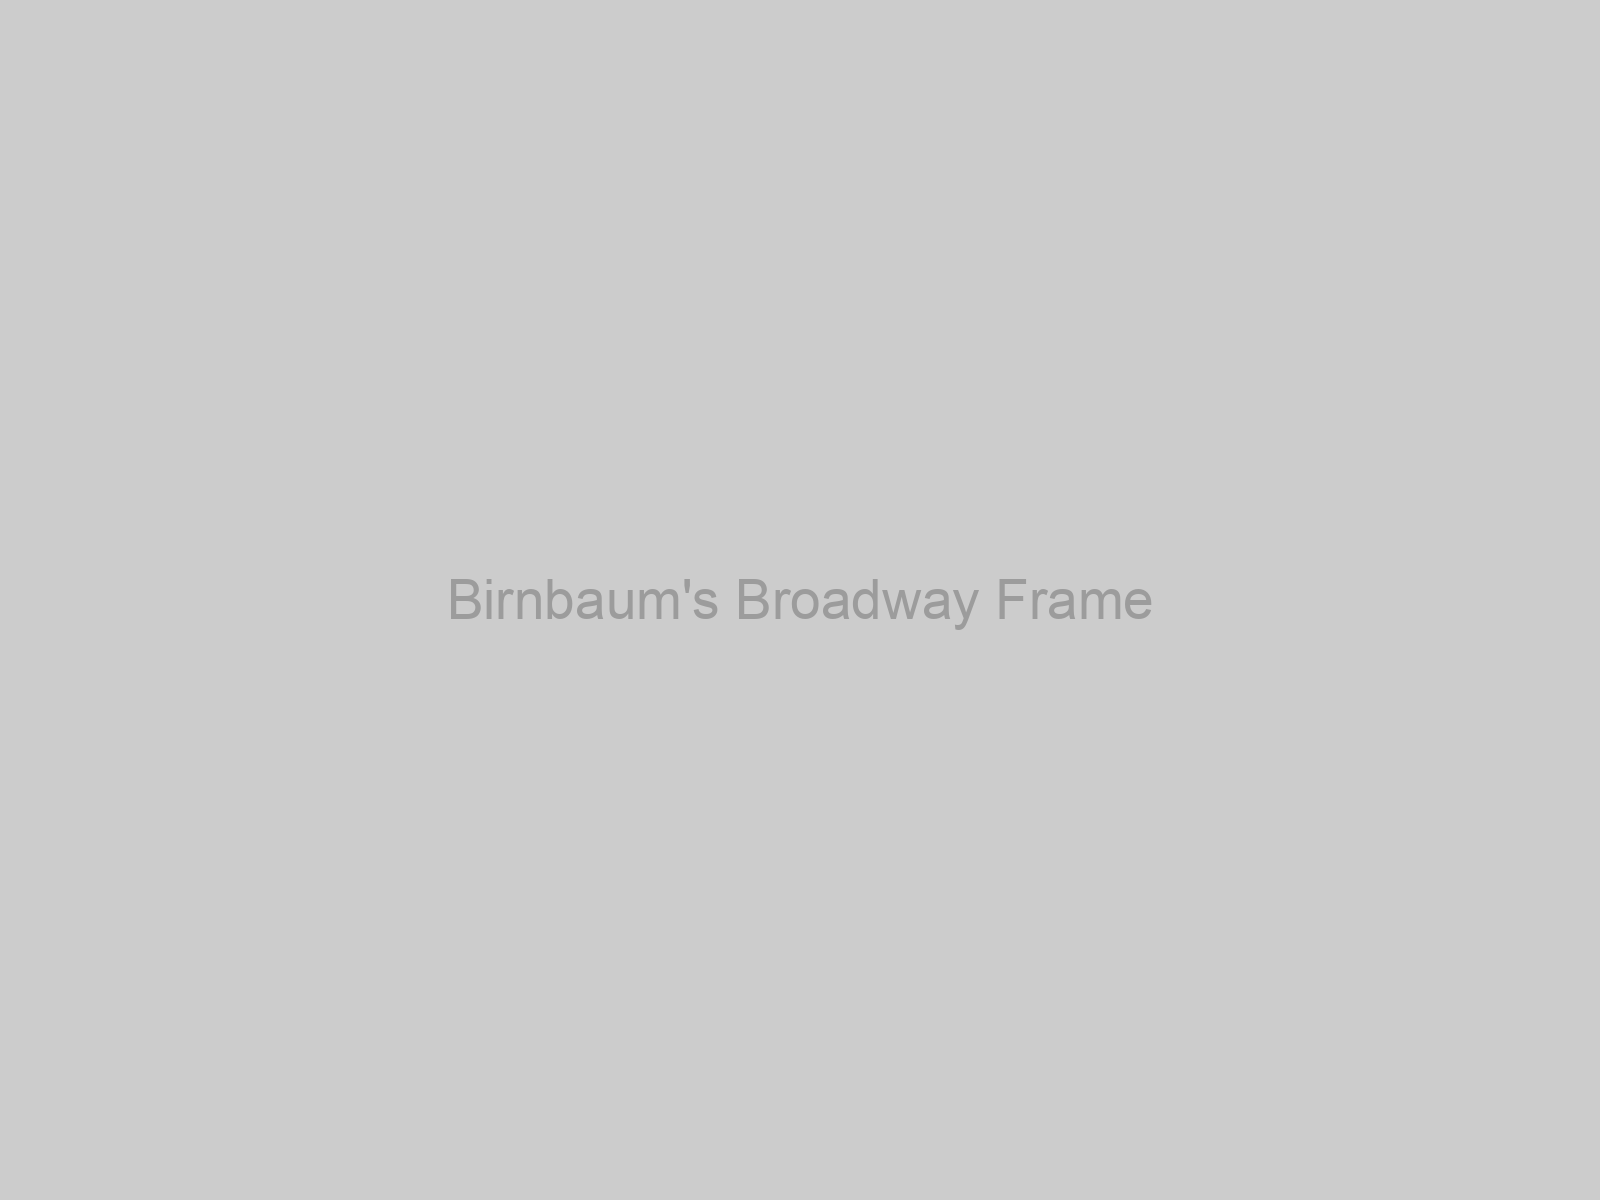 Birnbaum's Broadway Frame